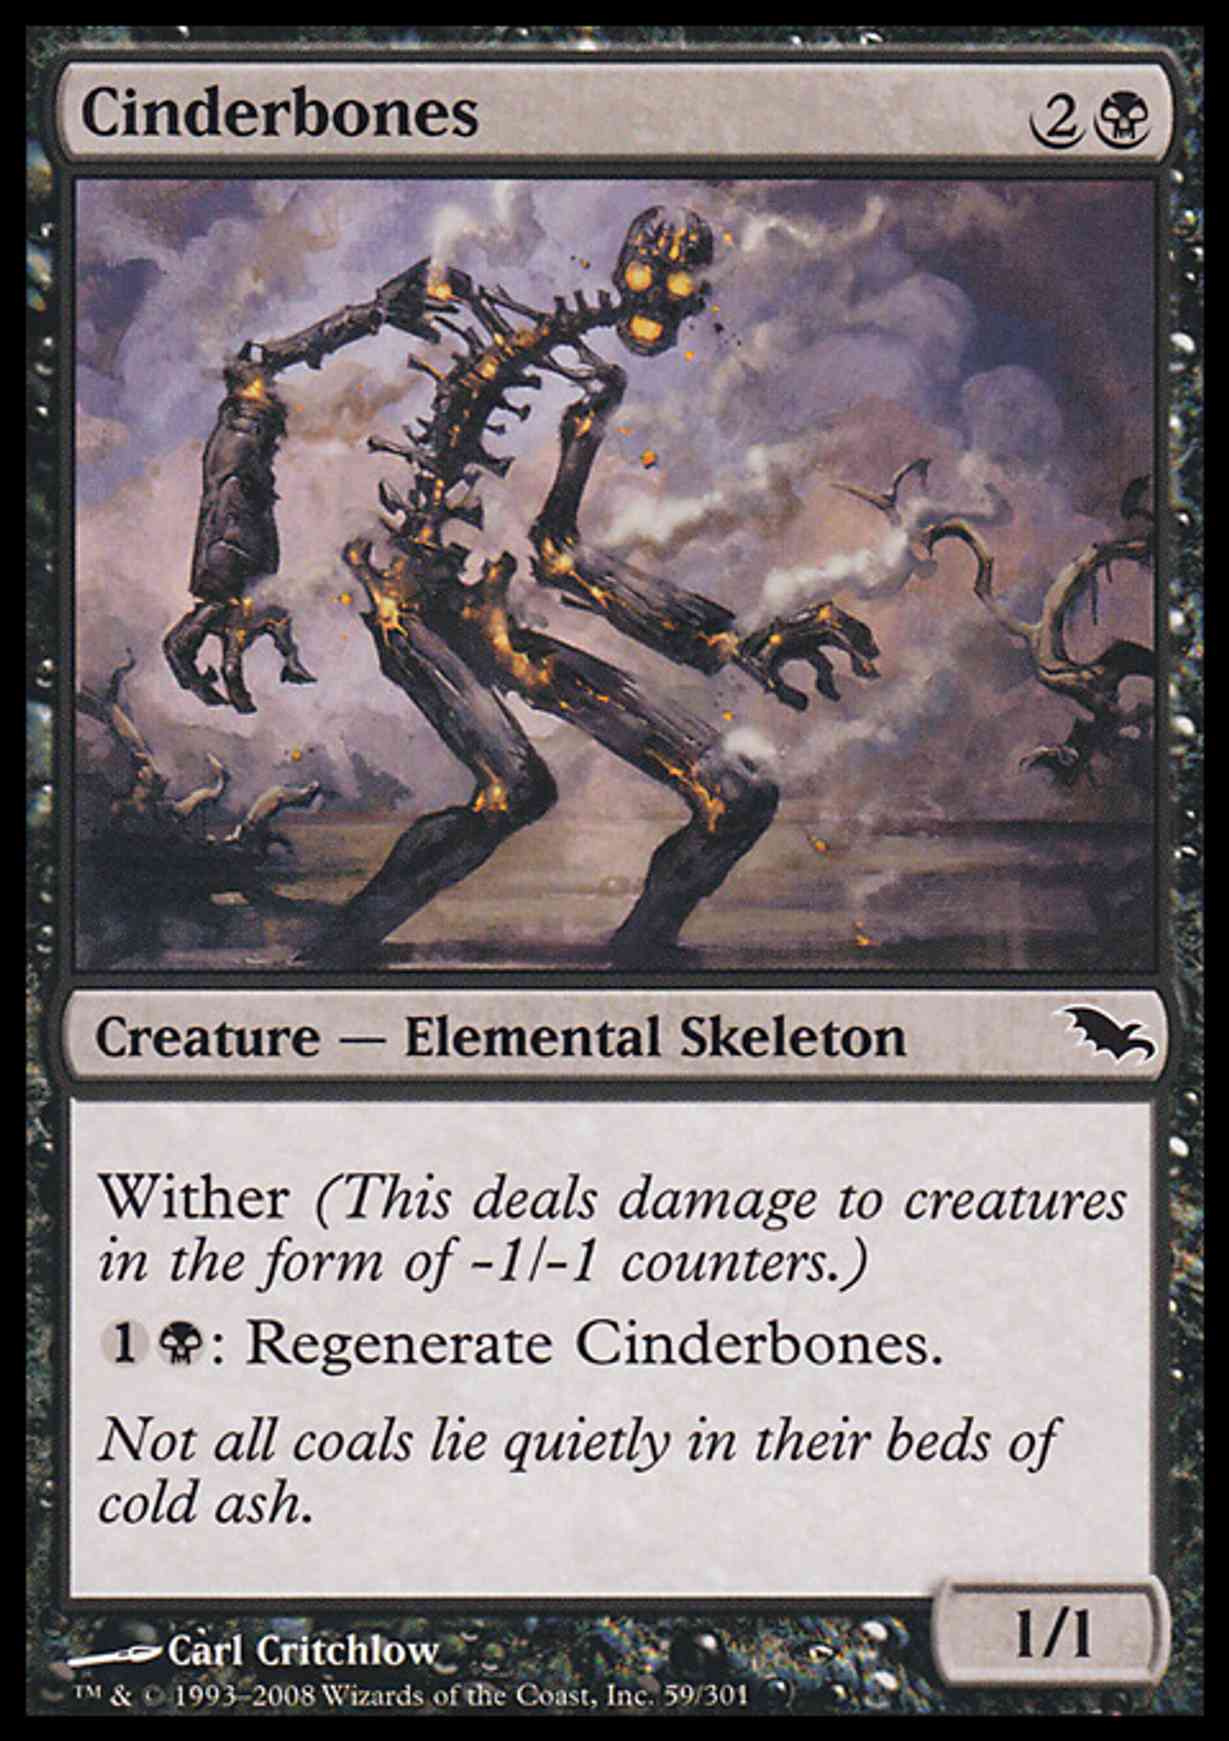 Cinderbones magic card front